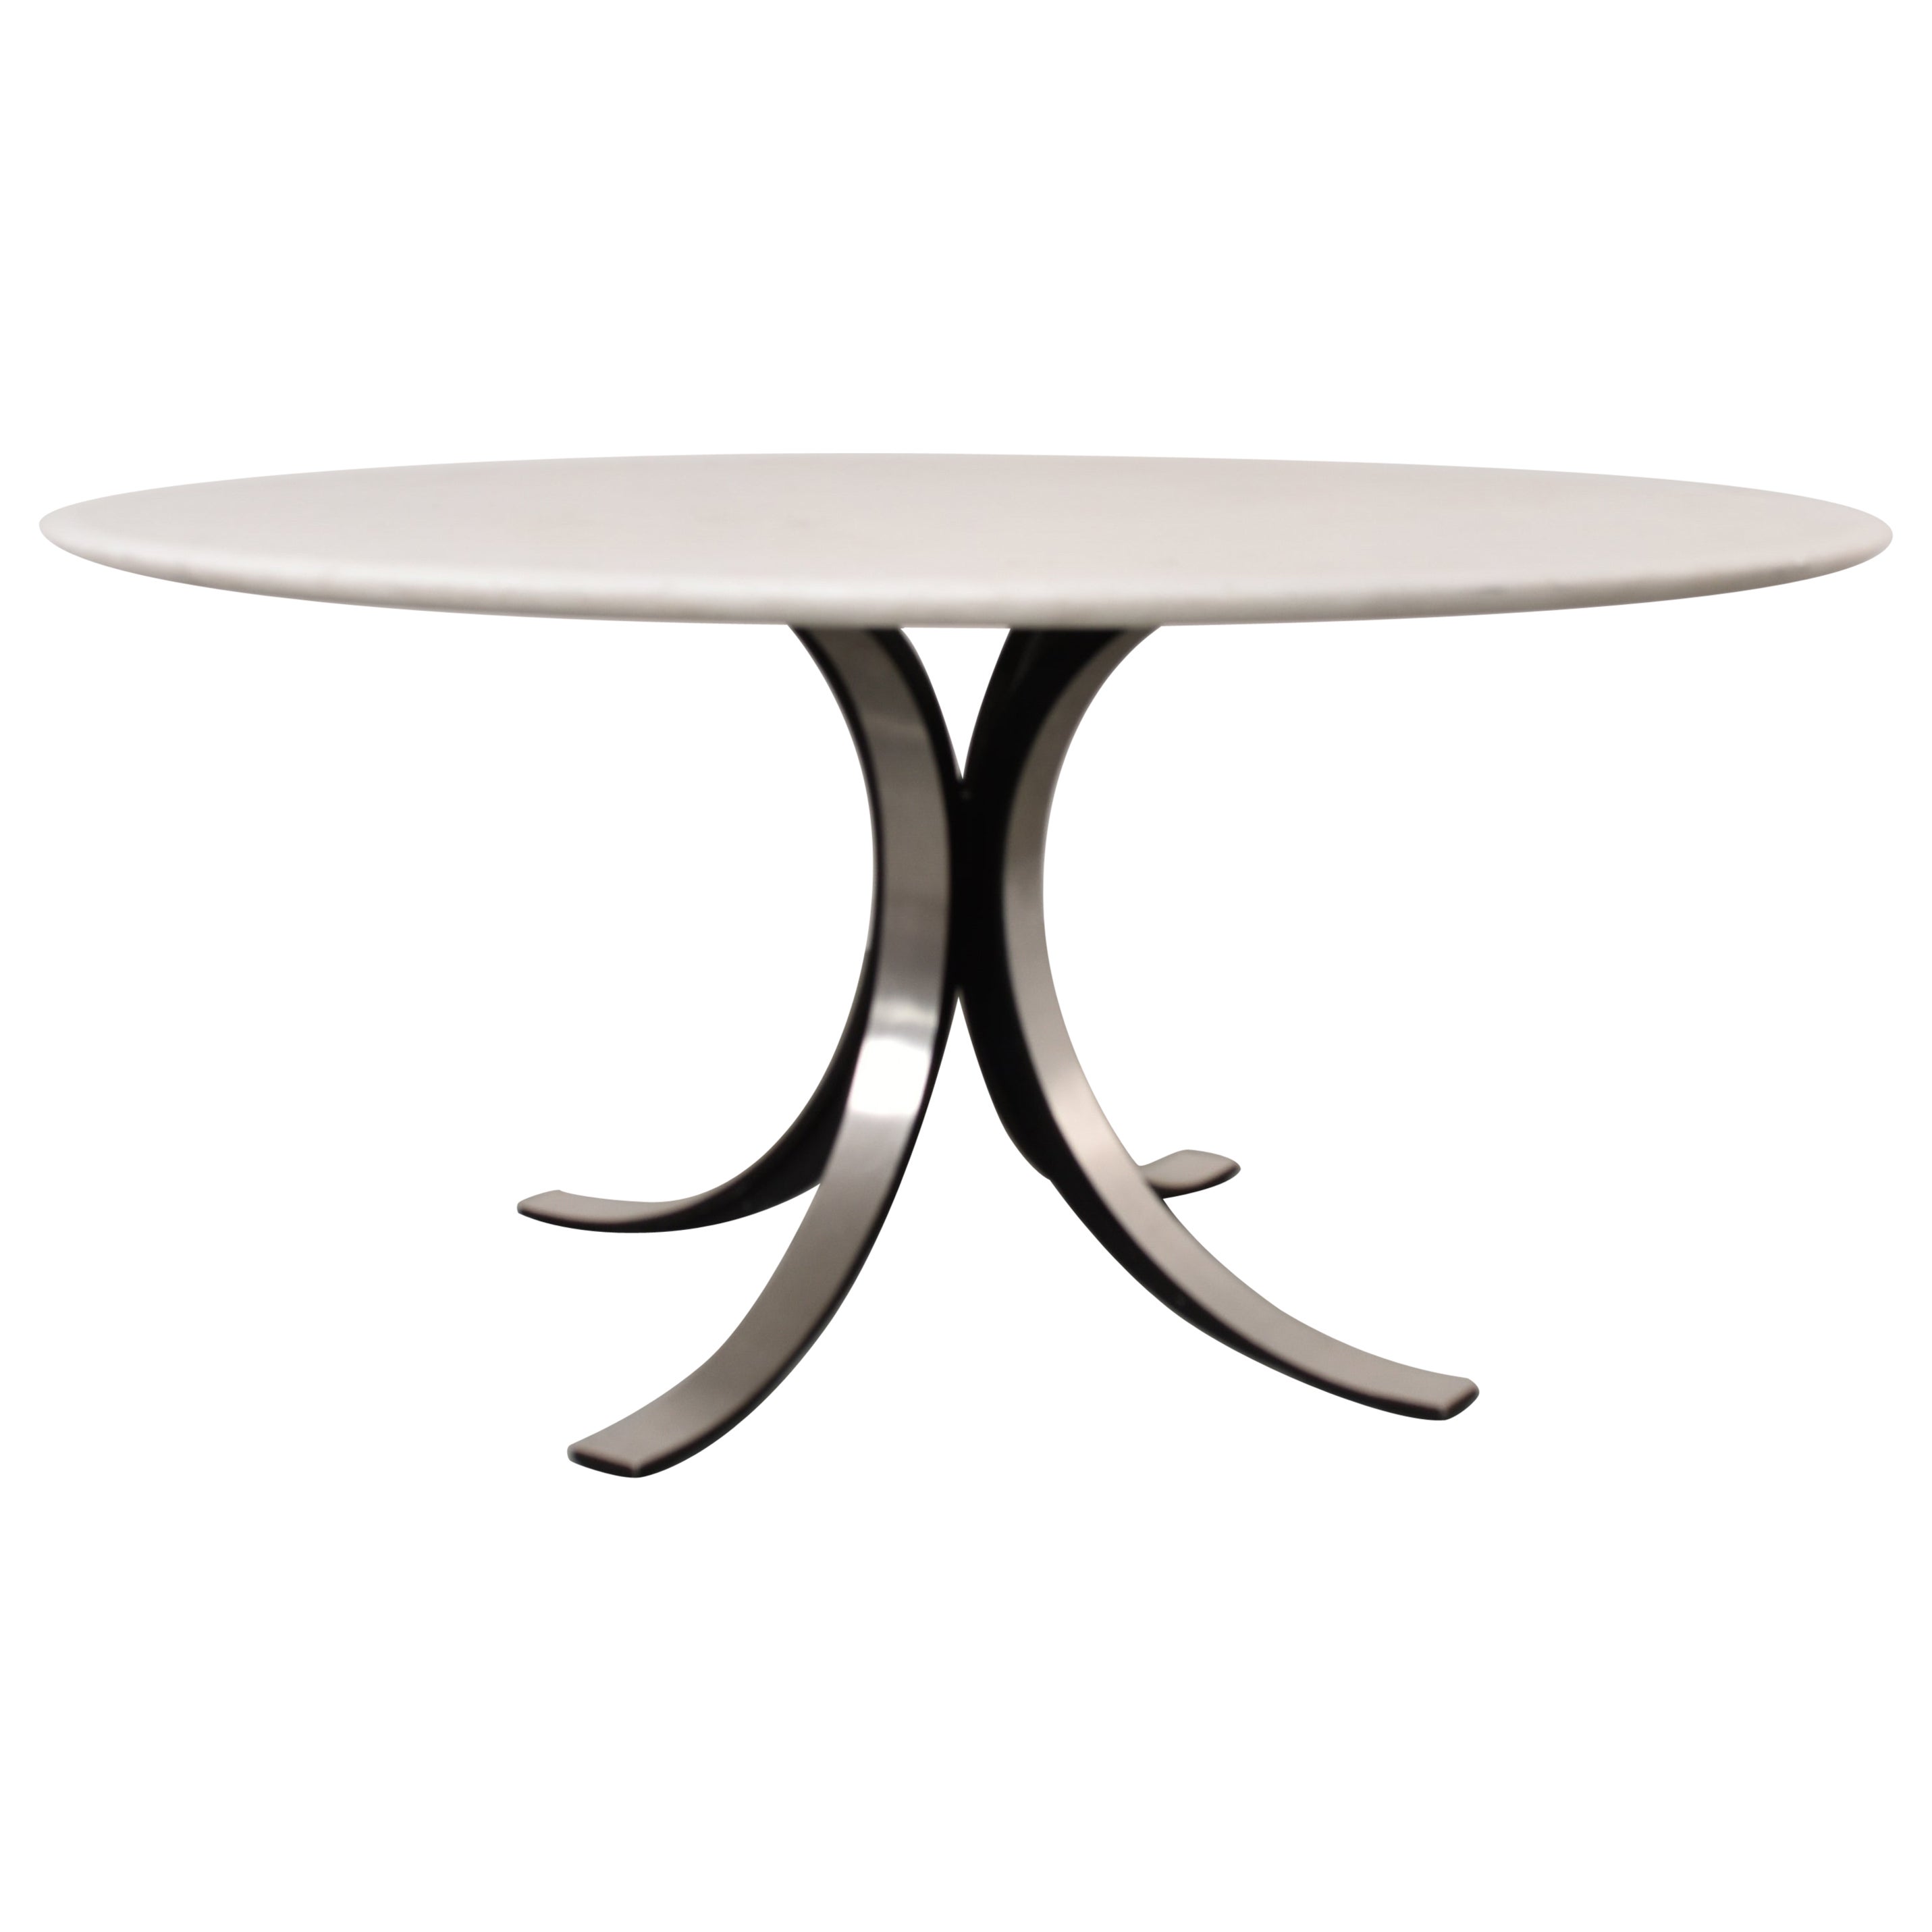 T69 Low dining table by Osvaldo Borsani & Eugenio Gerli for Tecno